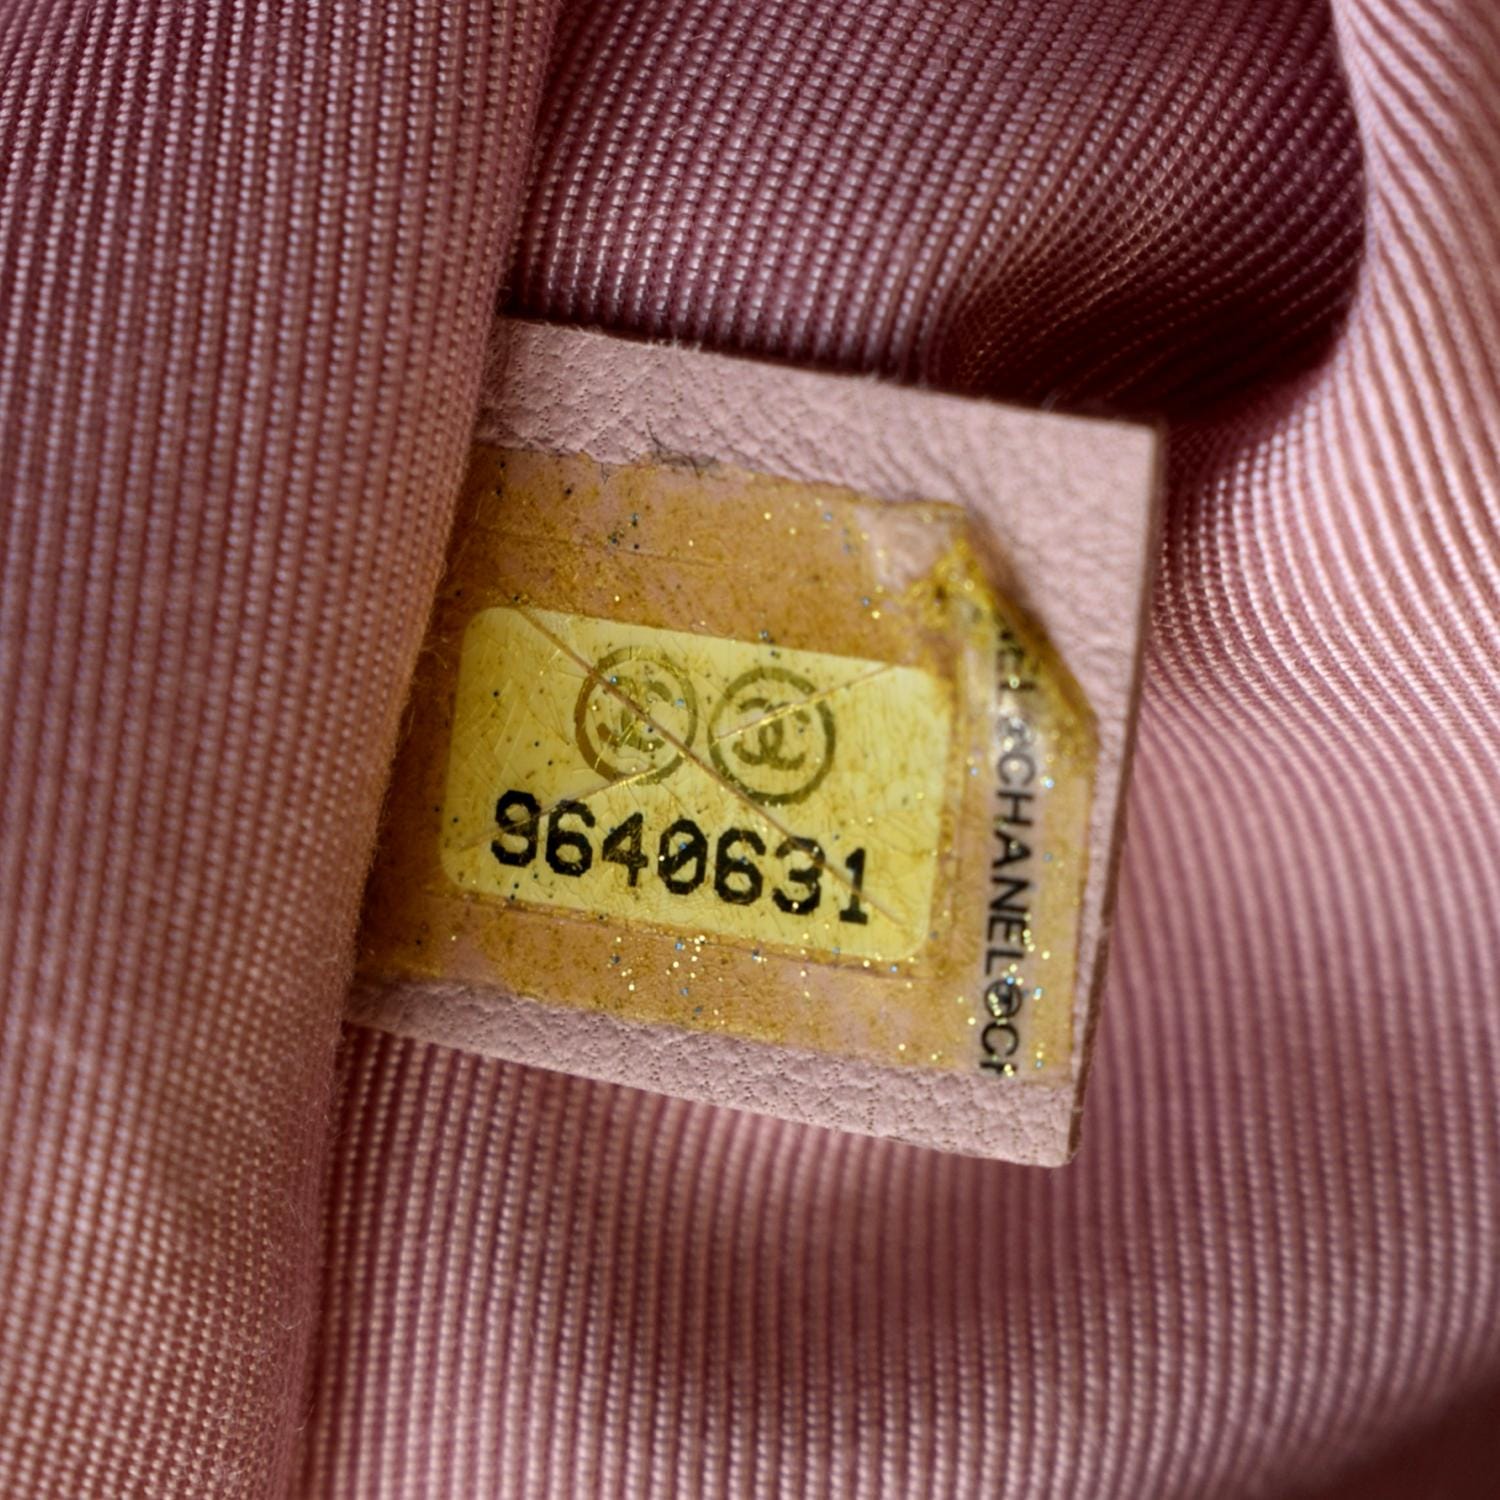 Chanel Coco Logo PVC Vinyl Tote Shoulder Bag Light Pink